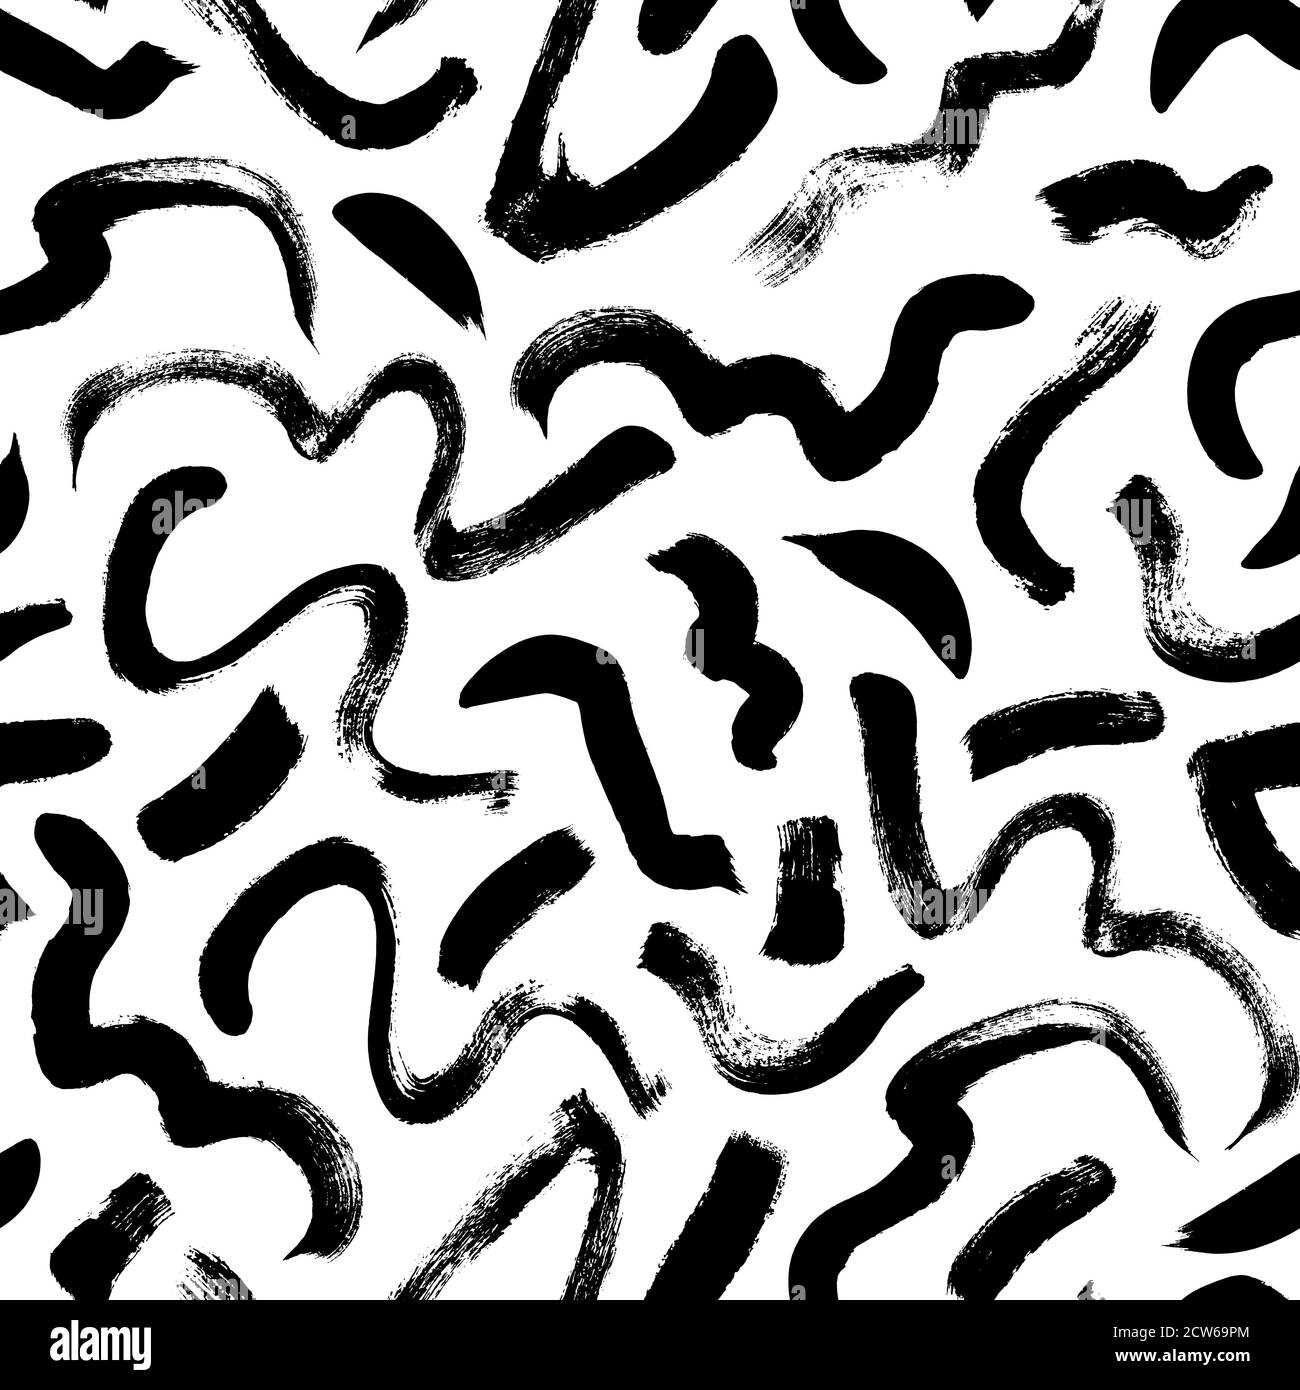 Swirled brush strokes vector seamless pattern. Stock Vector